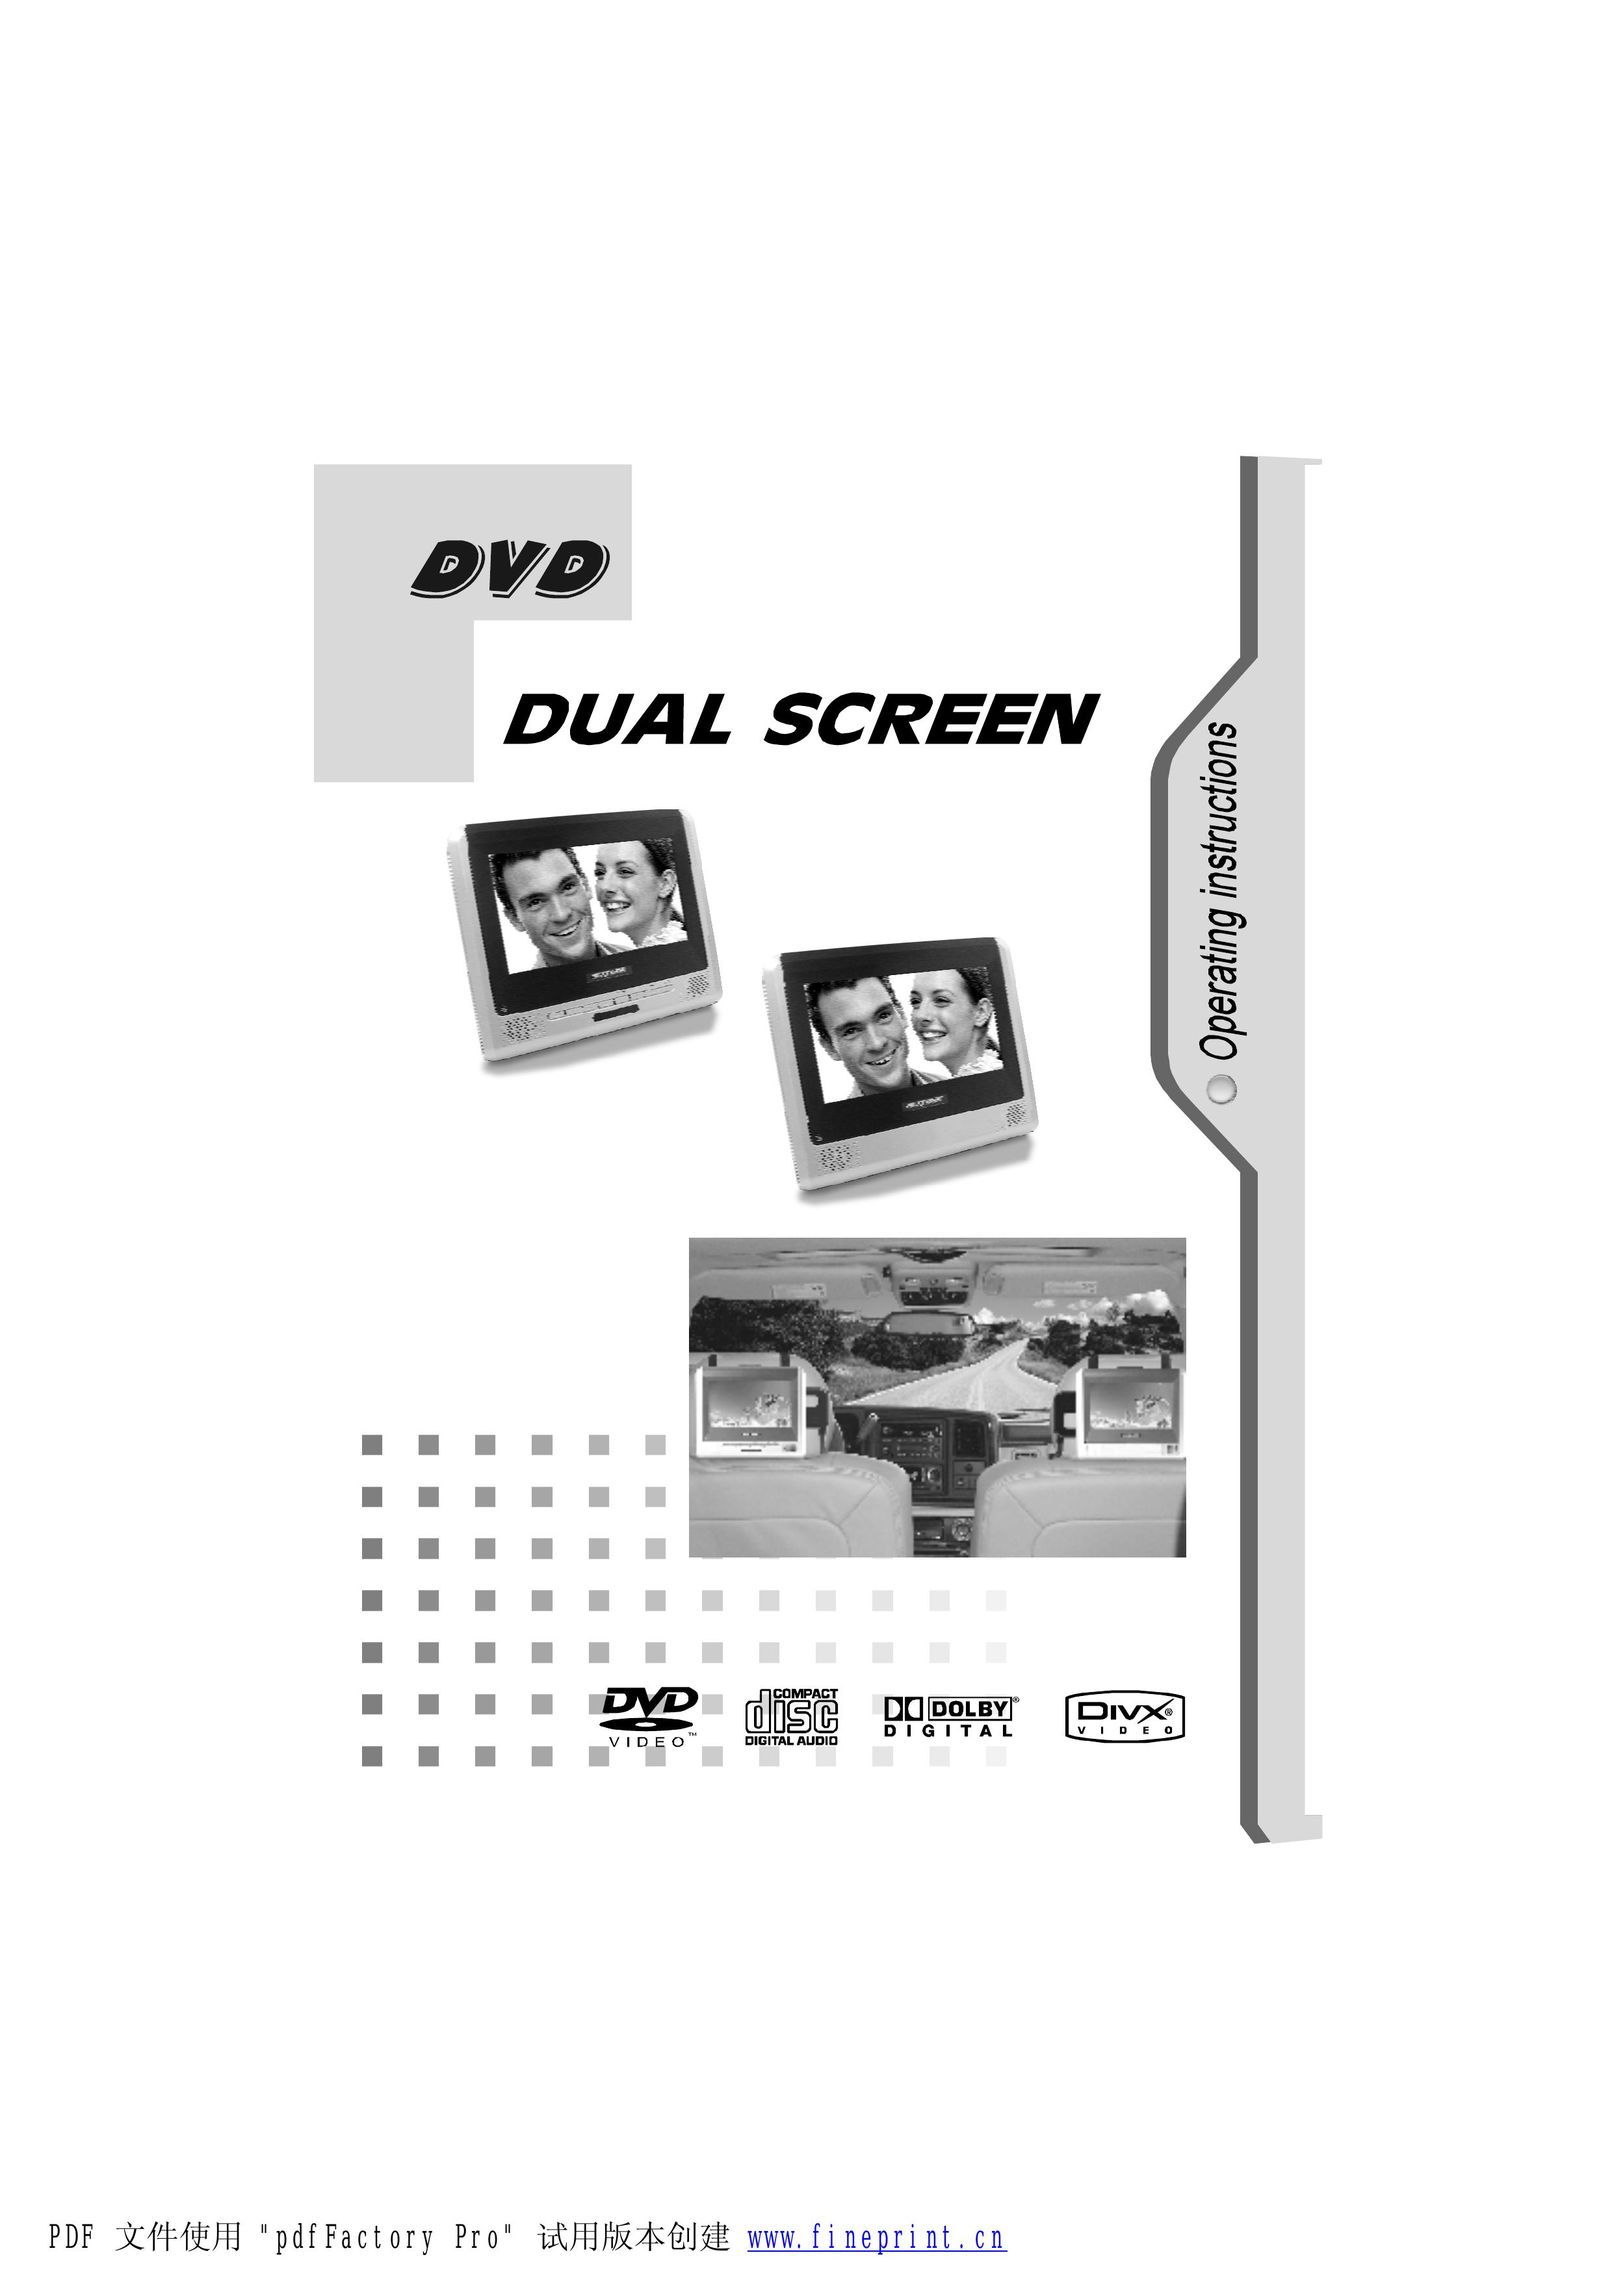 NextBase SDV97-AM DVD Player User Manual